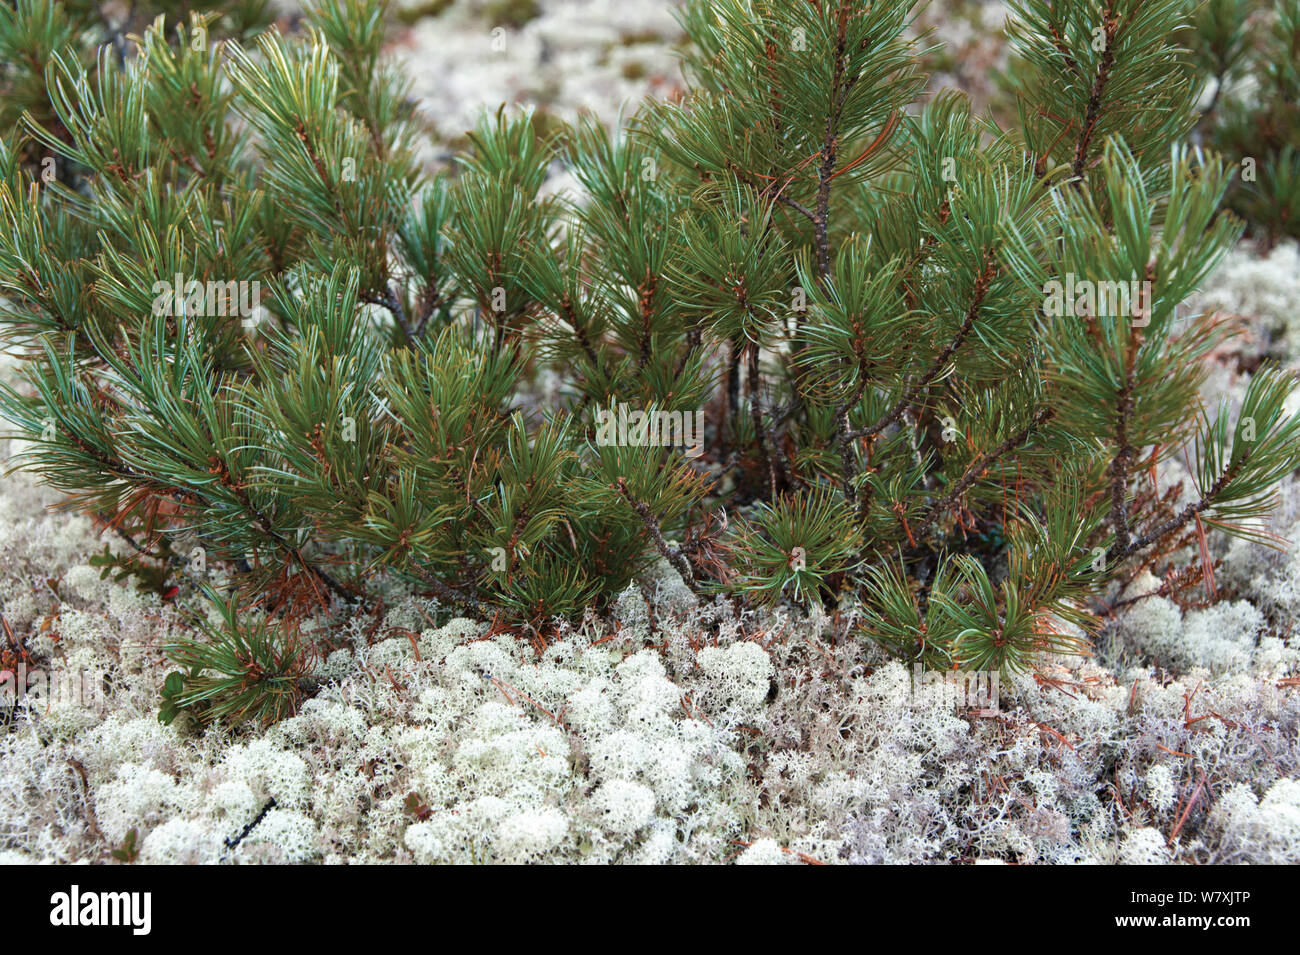 Pino enano siberiano (Pinus pumila) Parque Nacional Zabaikalsky/ Barguzin prezerv, el lago Baikal, en Siberia, Rusia, de septiembre de 2013. Foto de stock